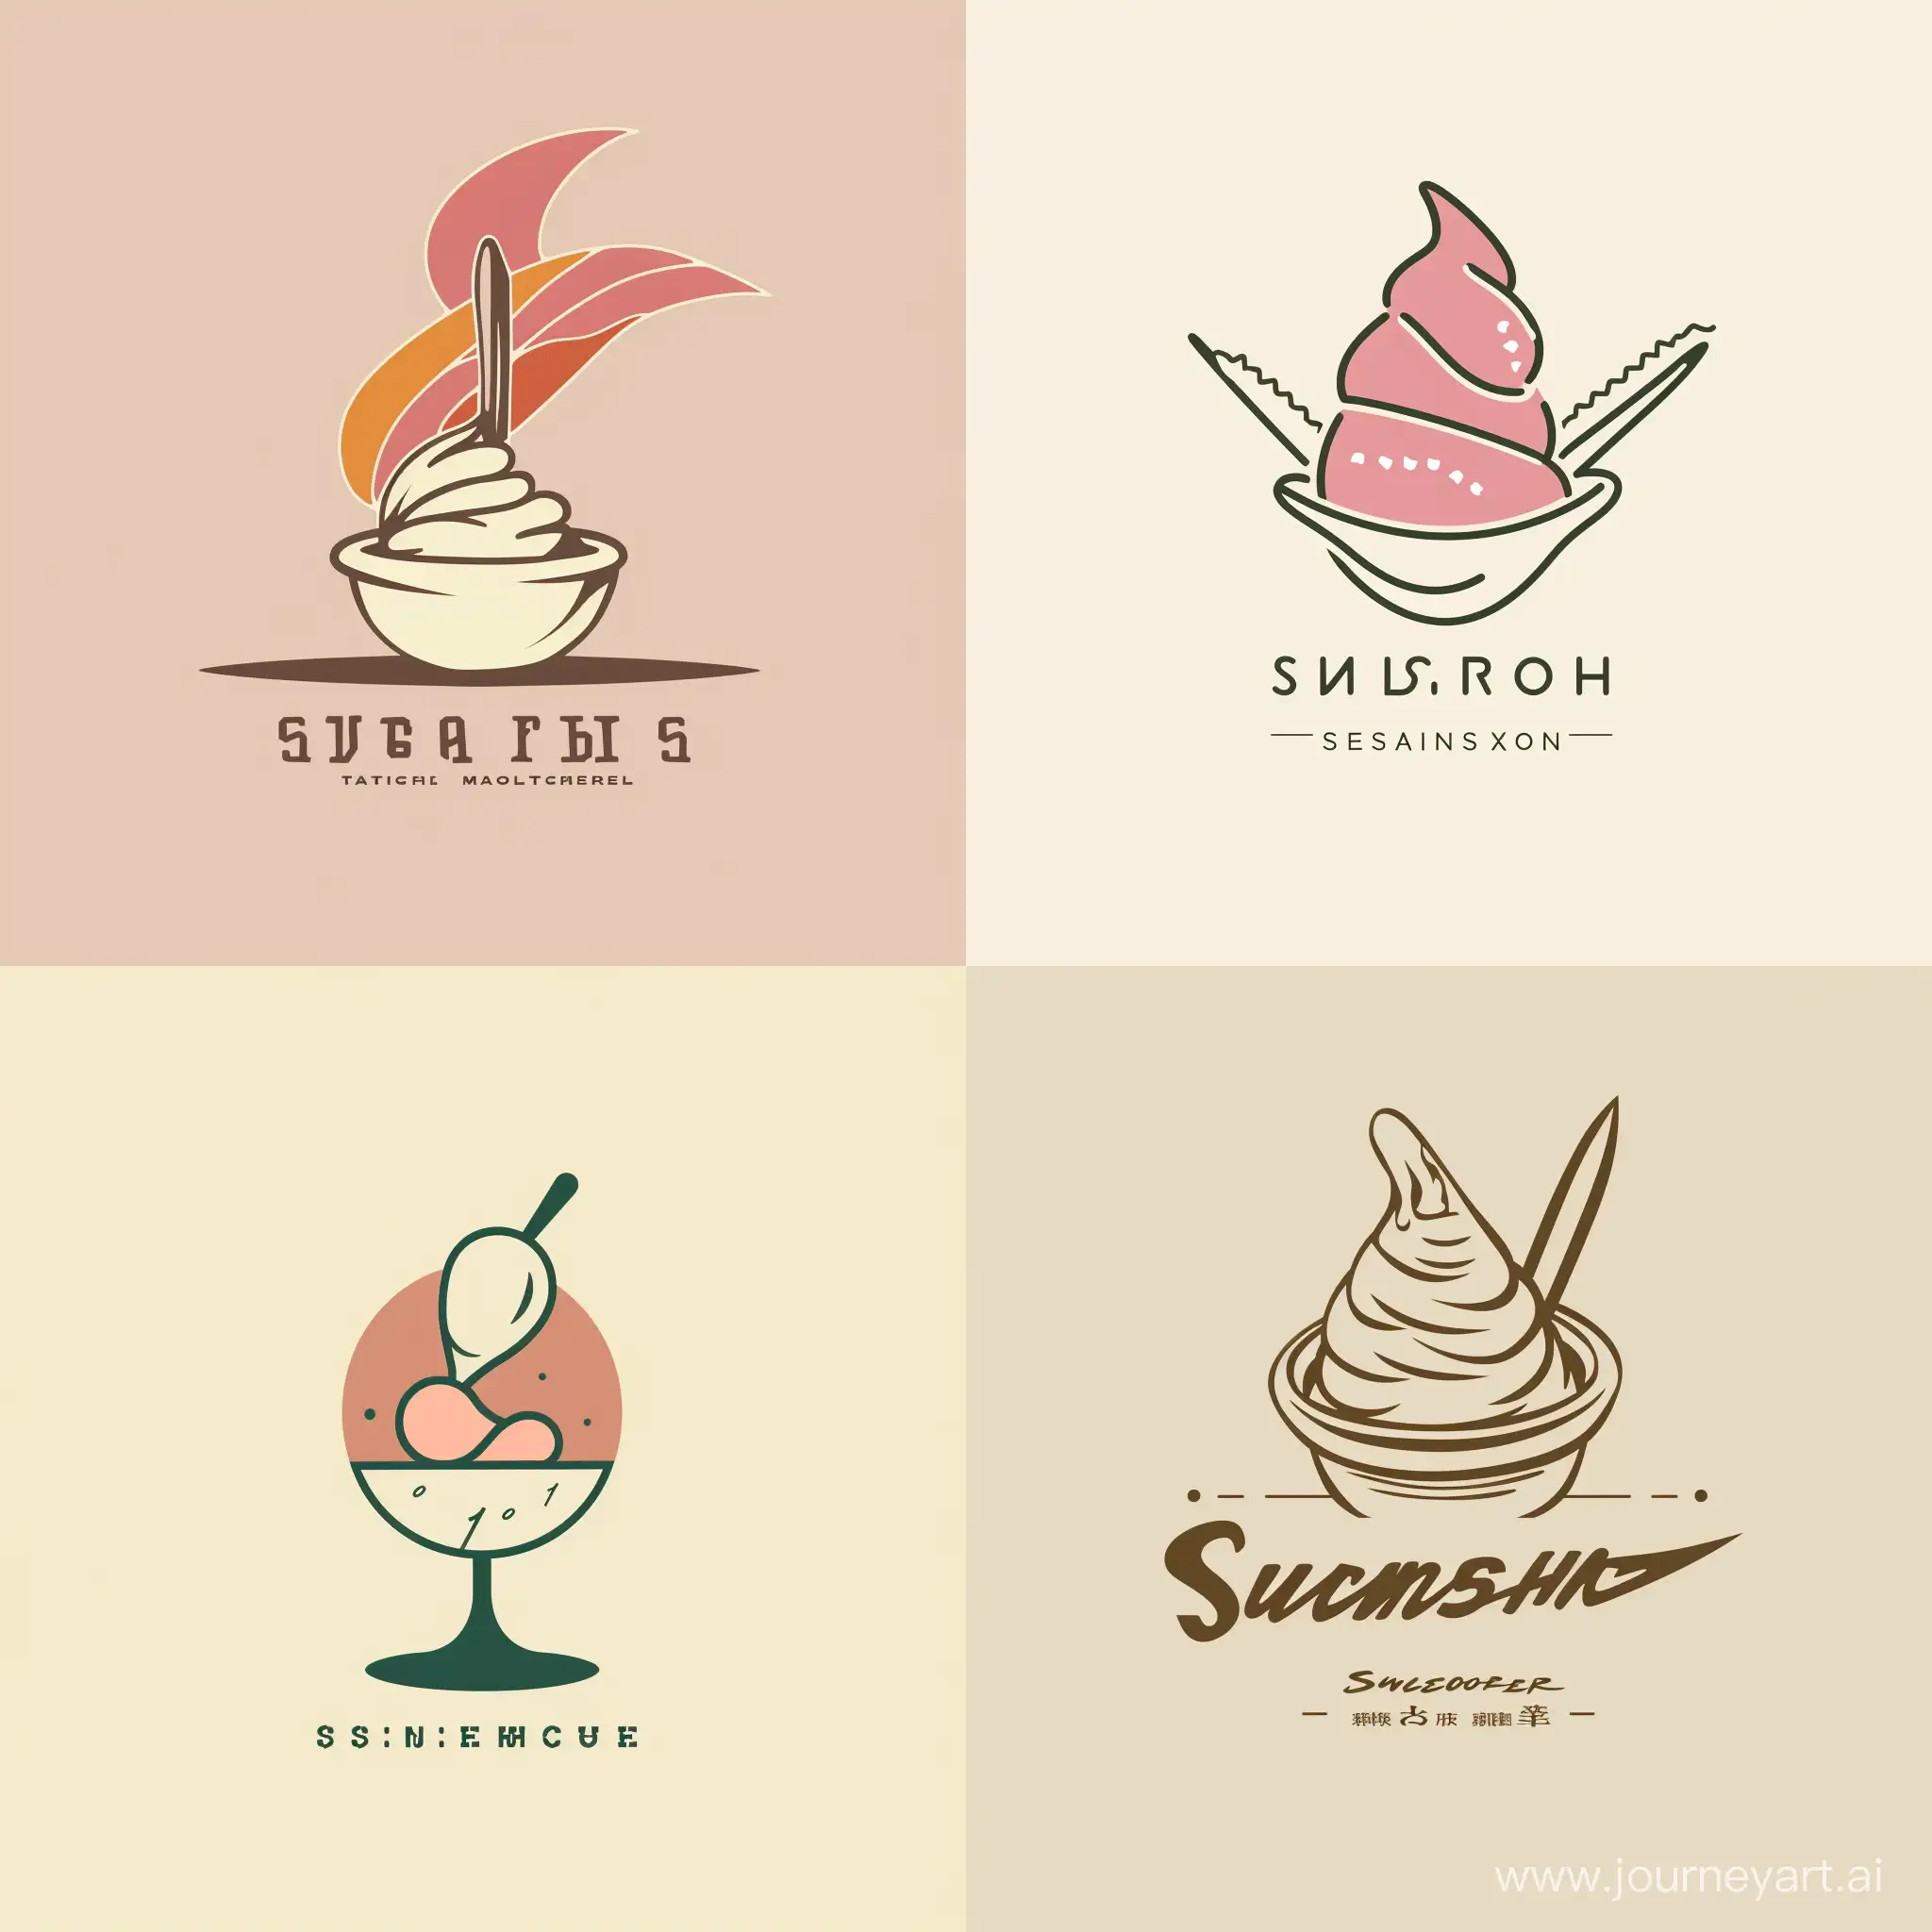 minimalist logo in retro style for a frozen yoghurt shop called Swordfish